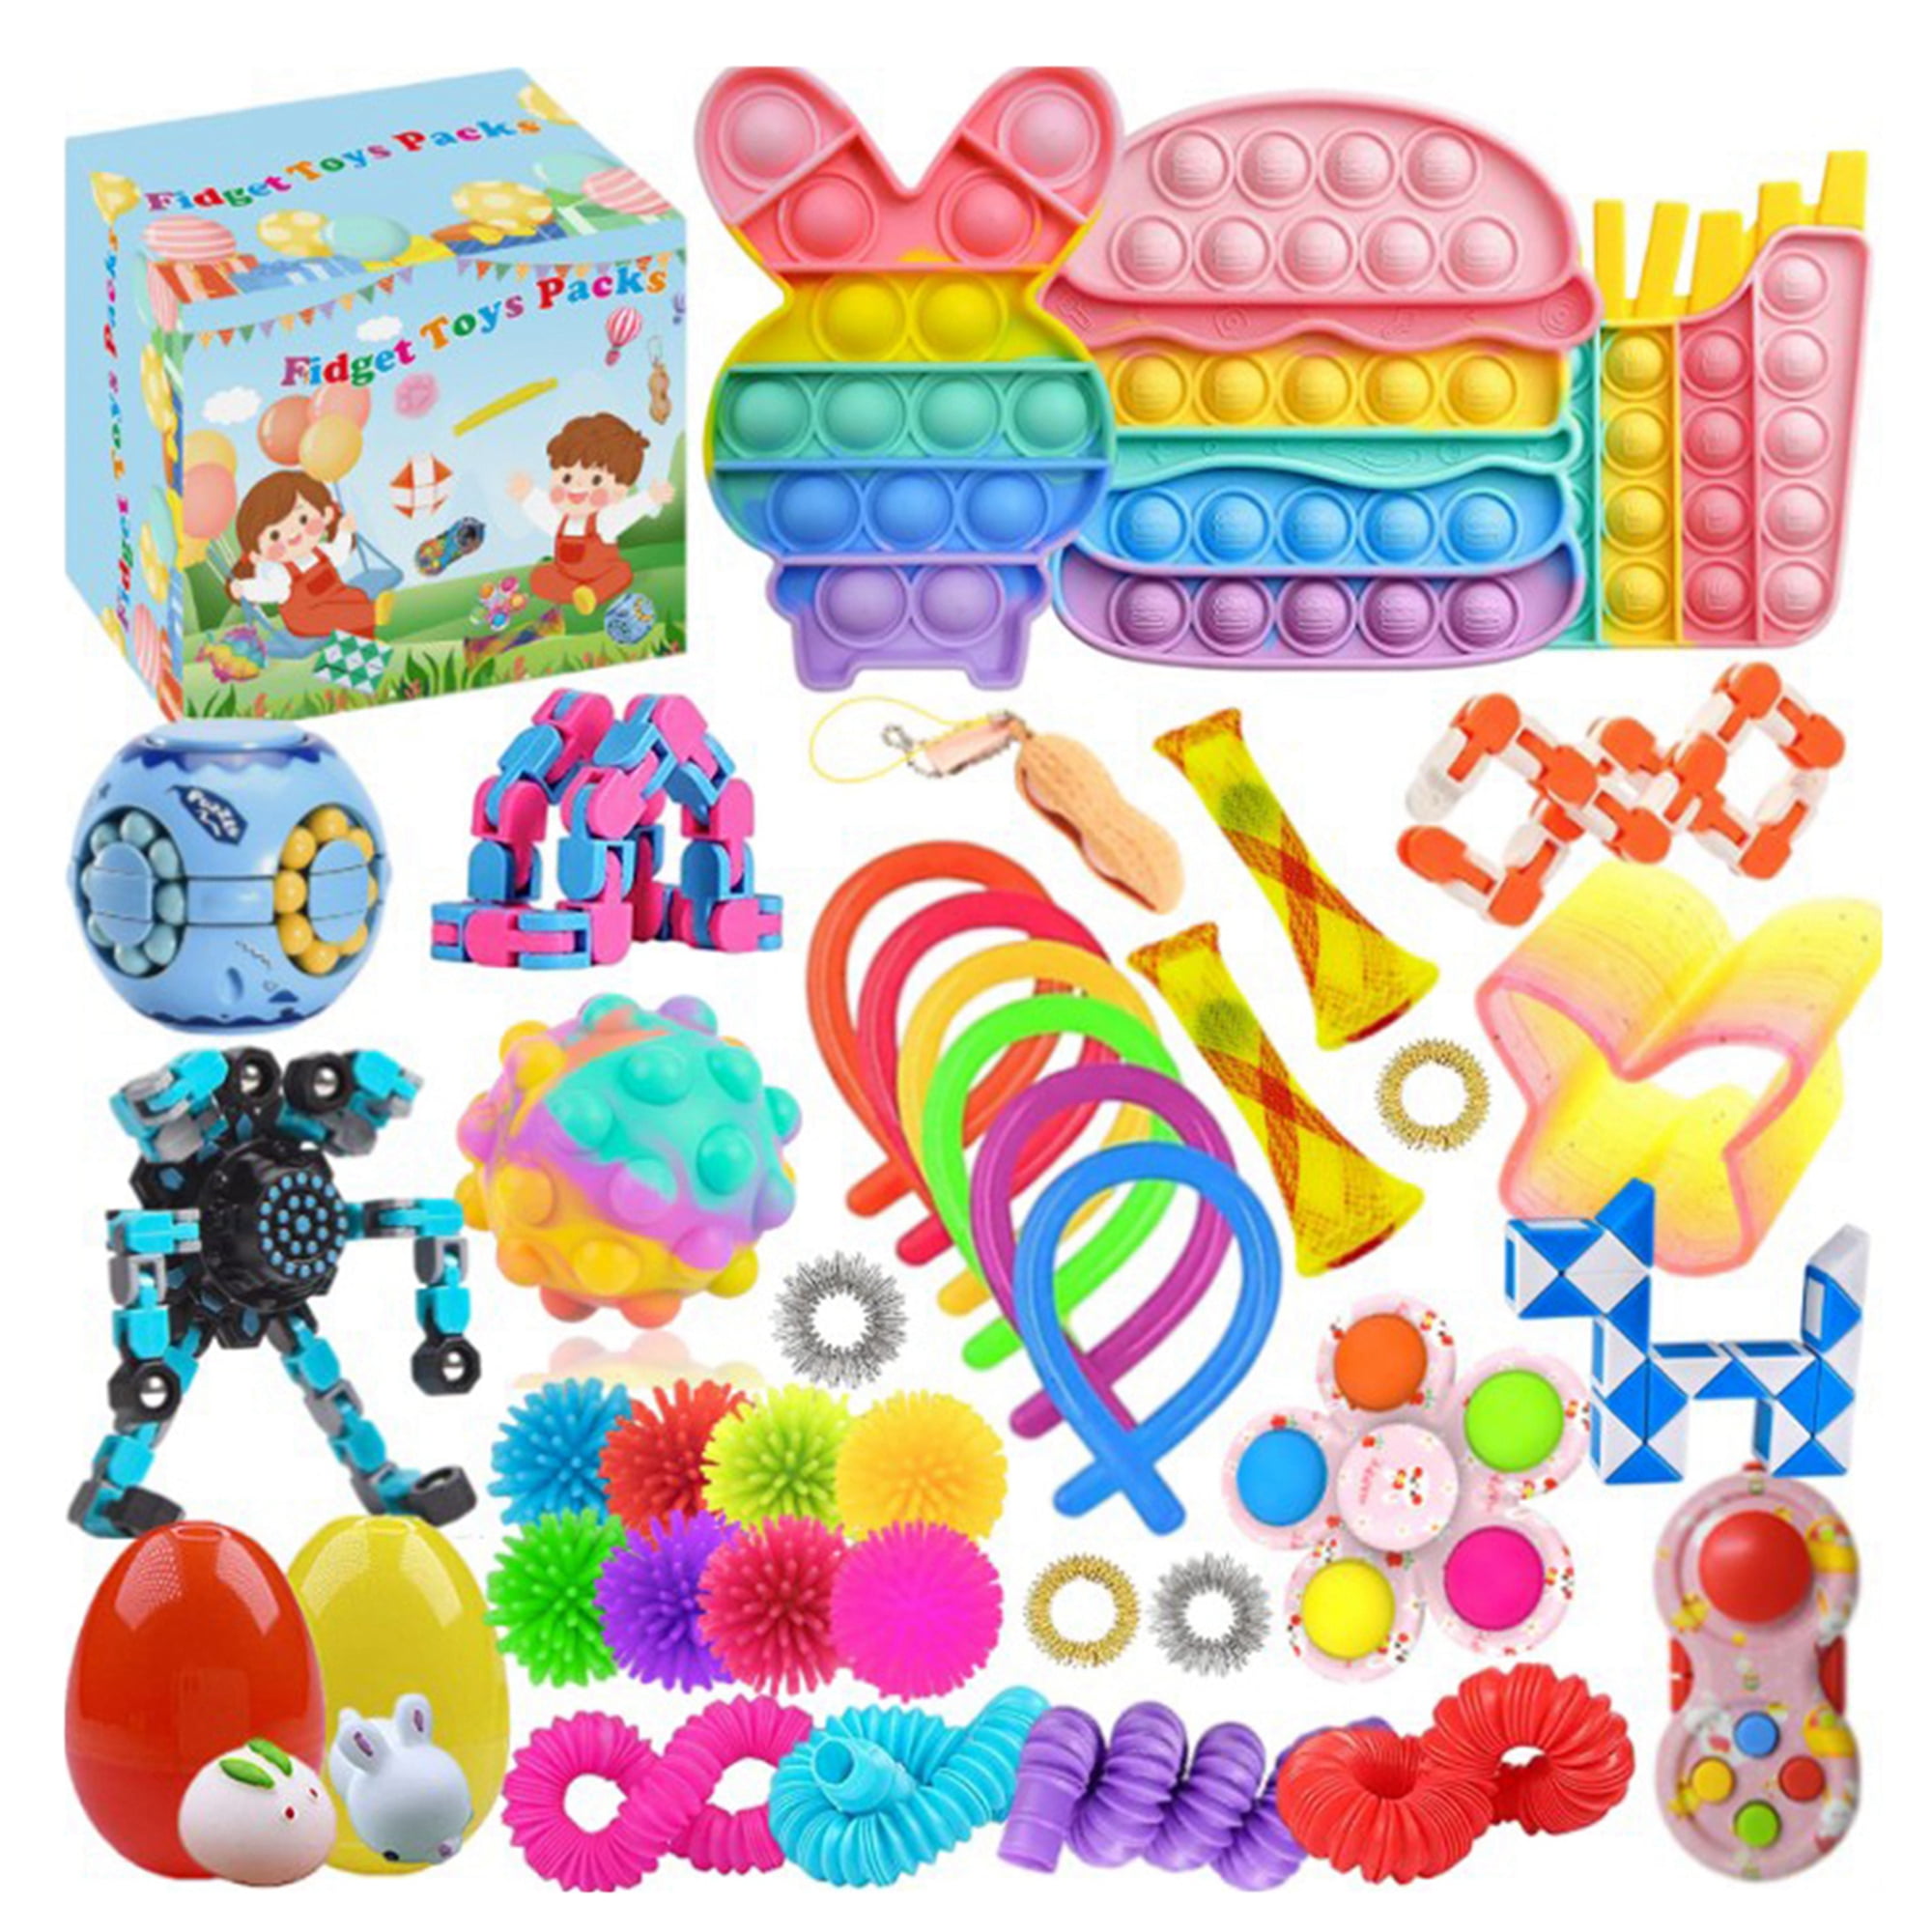 Tigerhu Fidget Toys, Fidget Toys Pack Sensory Toys, Jouets Anti